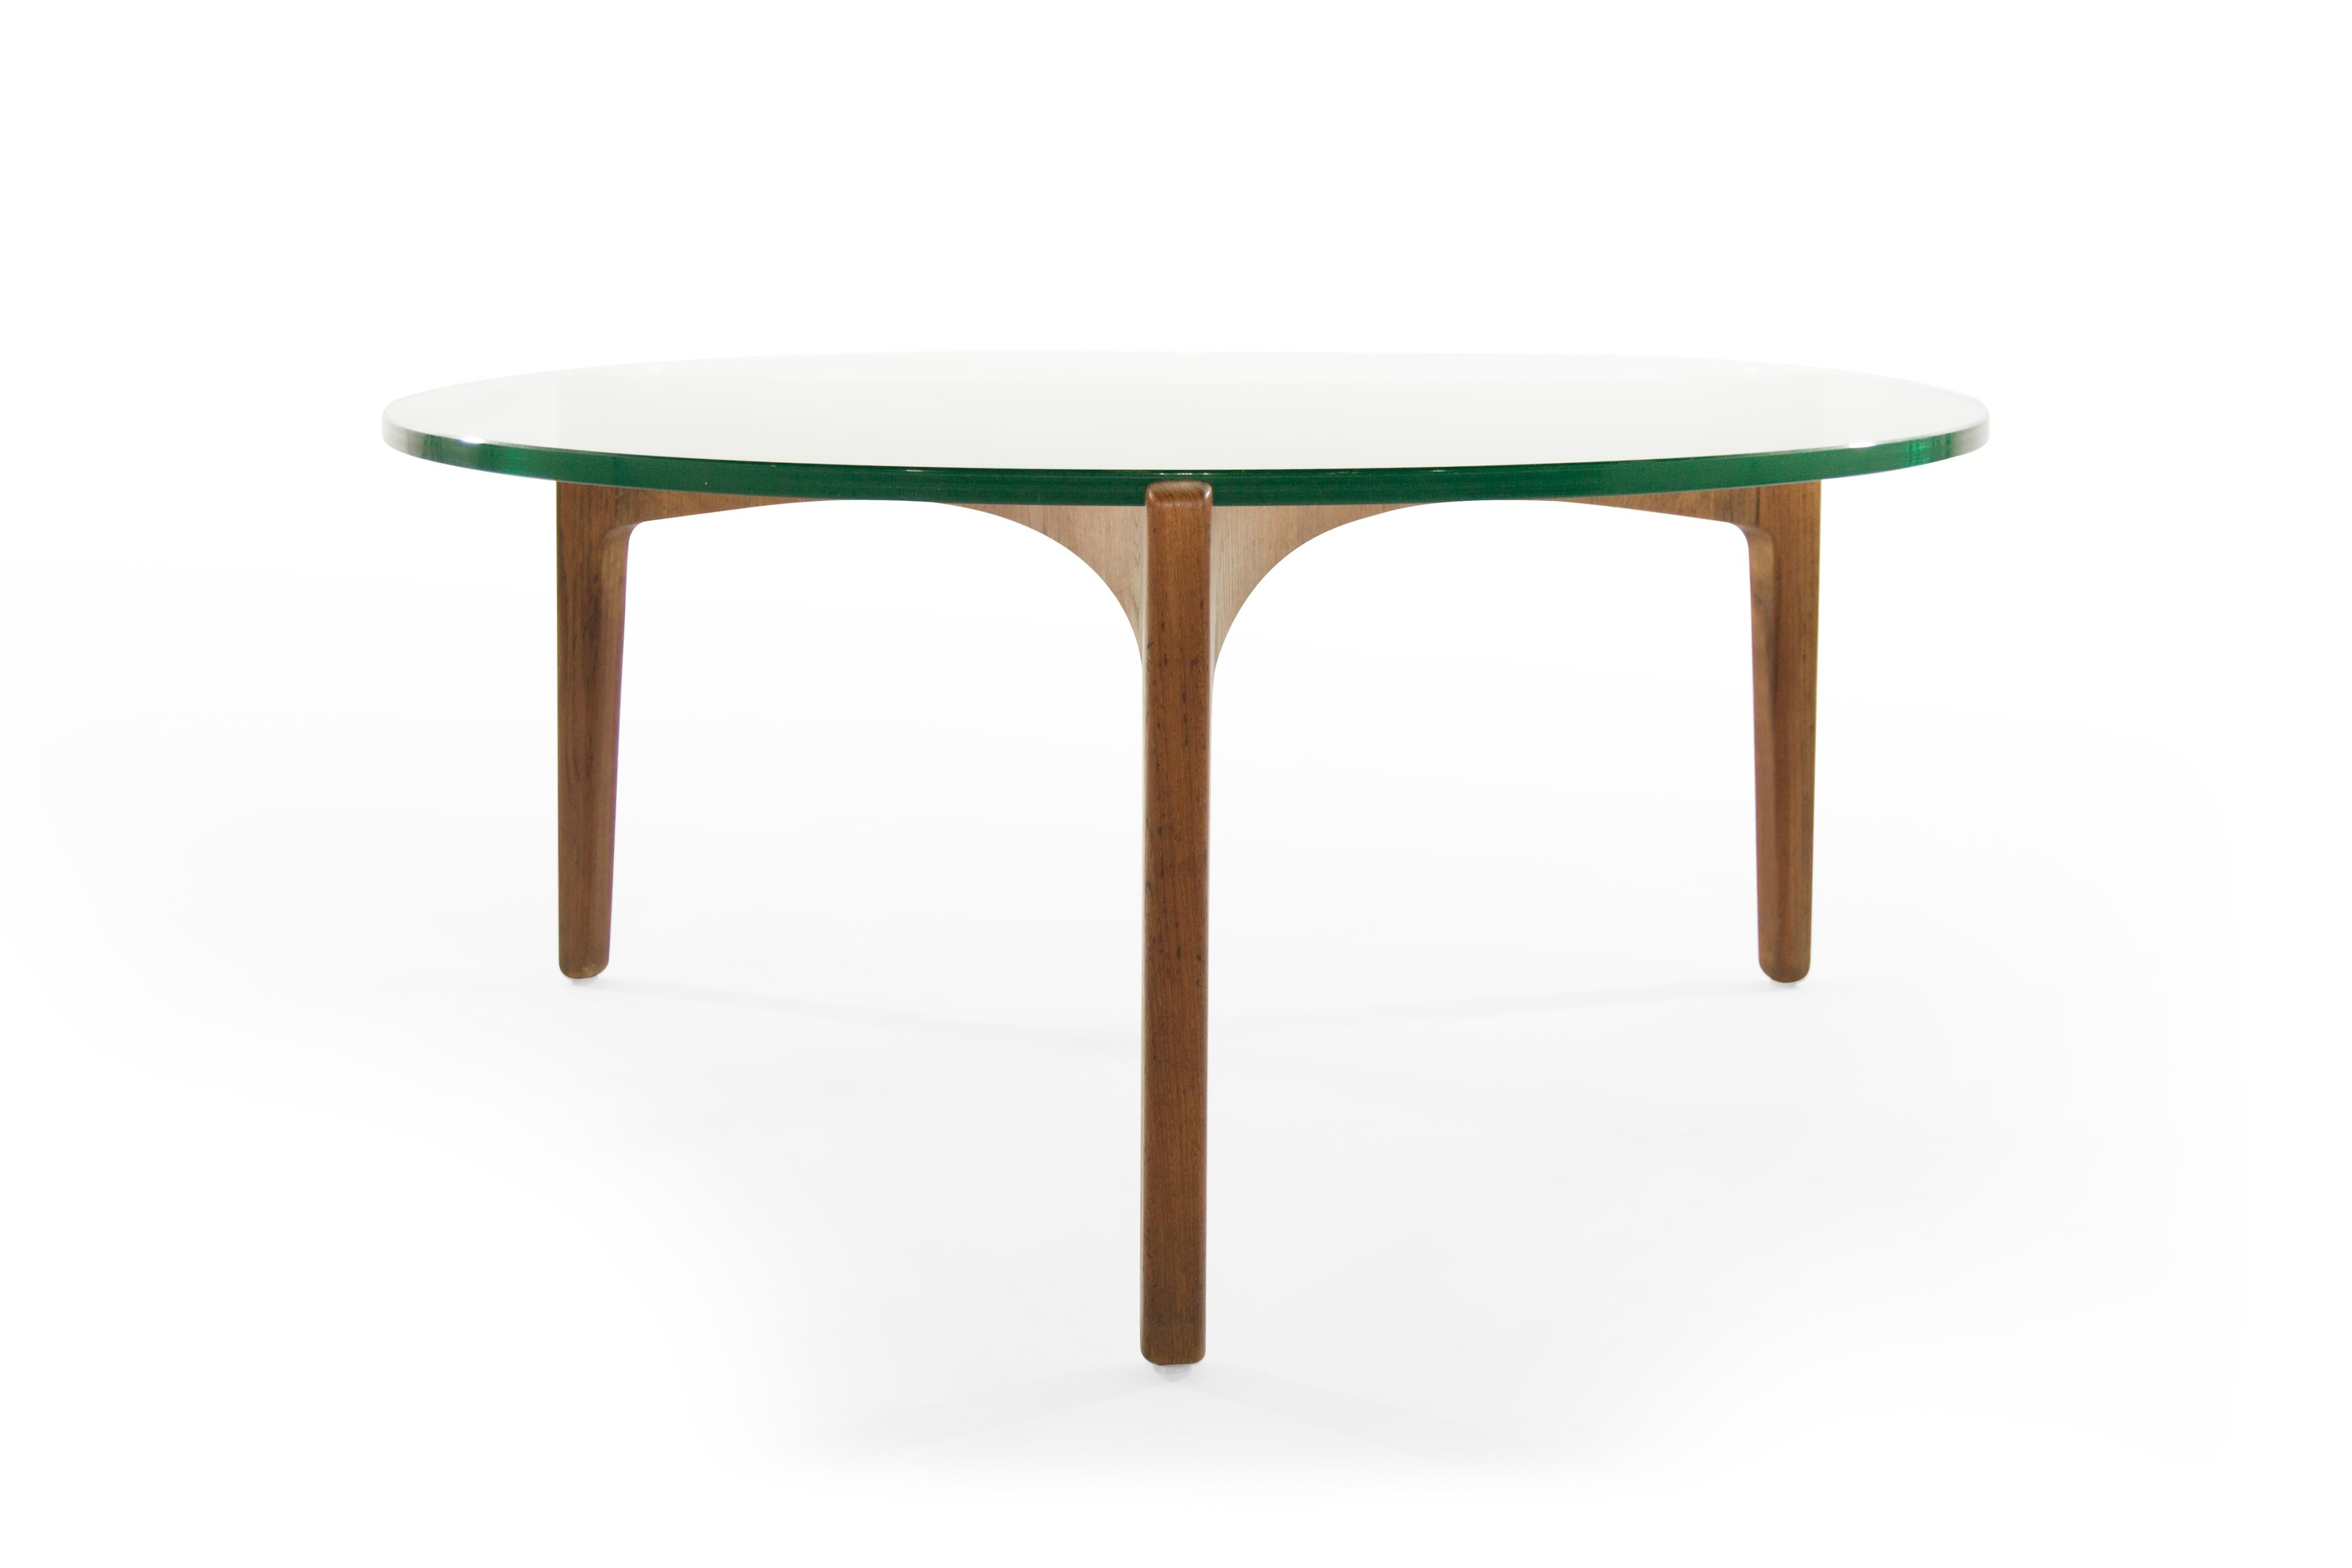 Scandinavian Modern coffee table designed by Sven Ellekaer. Sculptural teak base fully restored, new 3/4